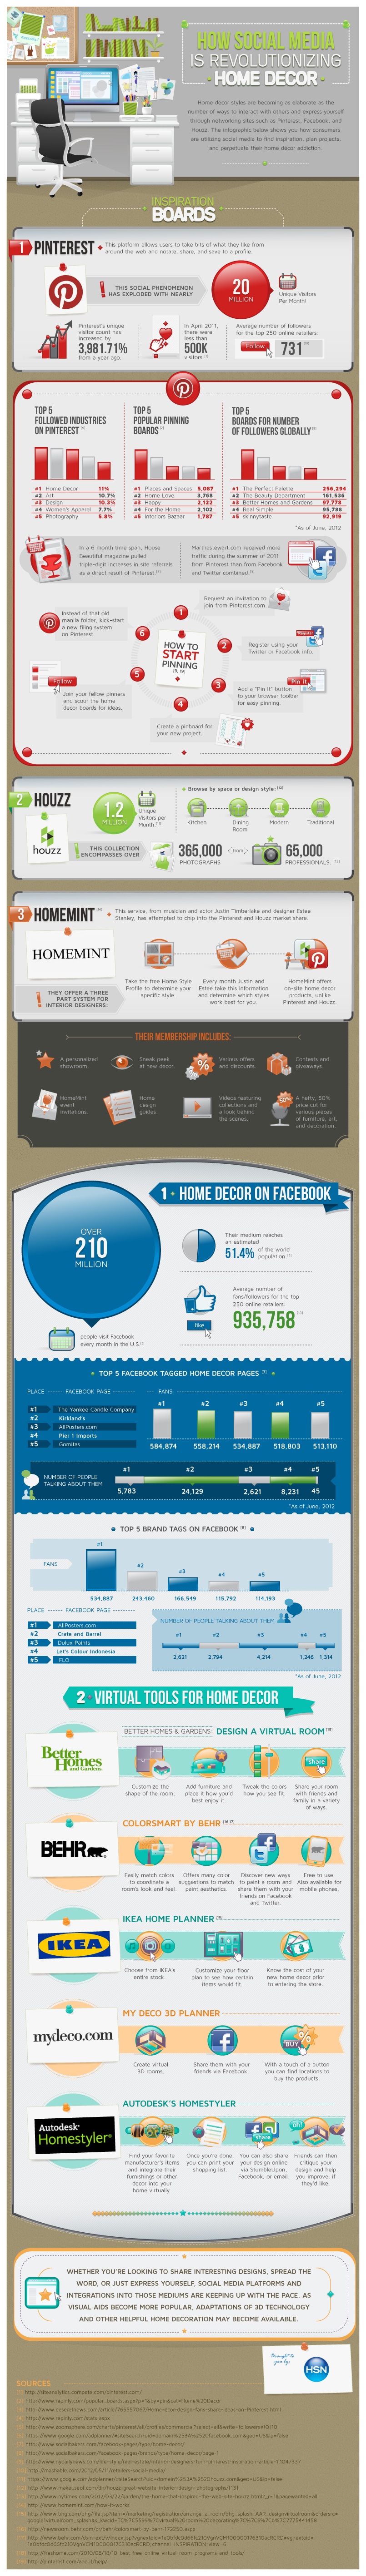 Social-Media-Home-Decor-Infographic